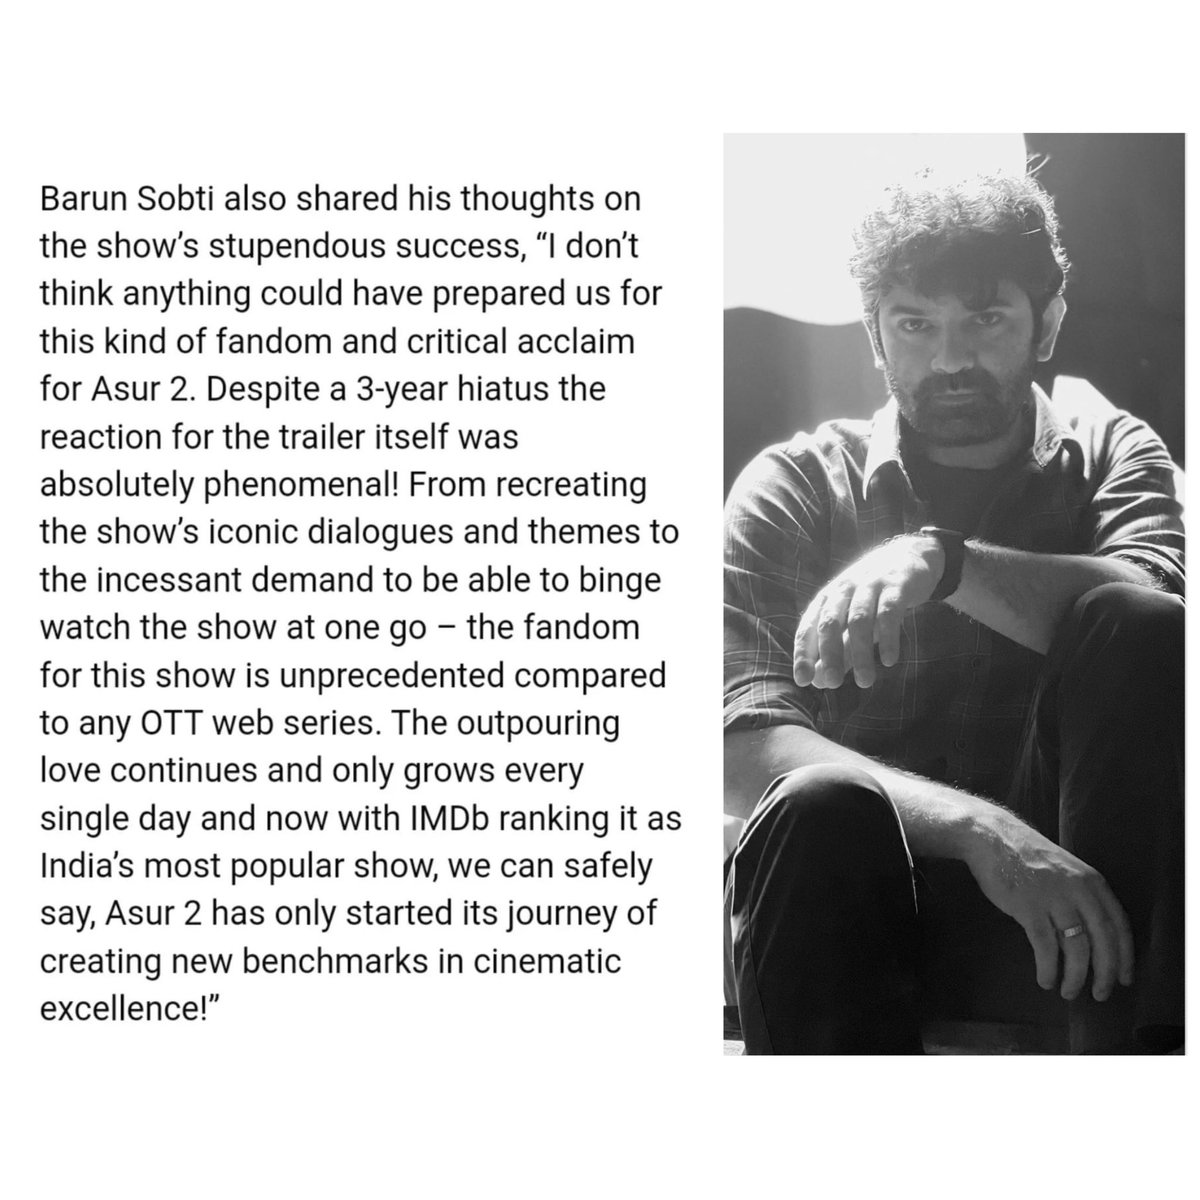 #BarunSobti𓃵 shared thoughts on #Asur2 
@BarunSobtiSays